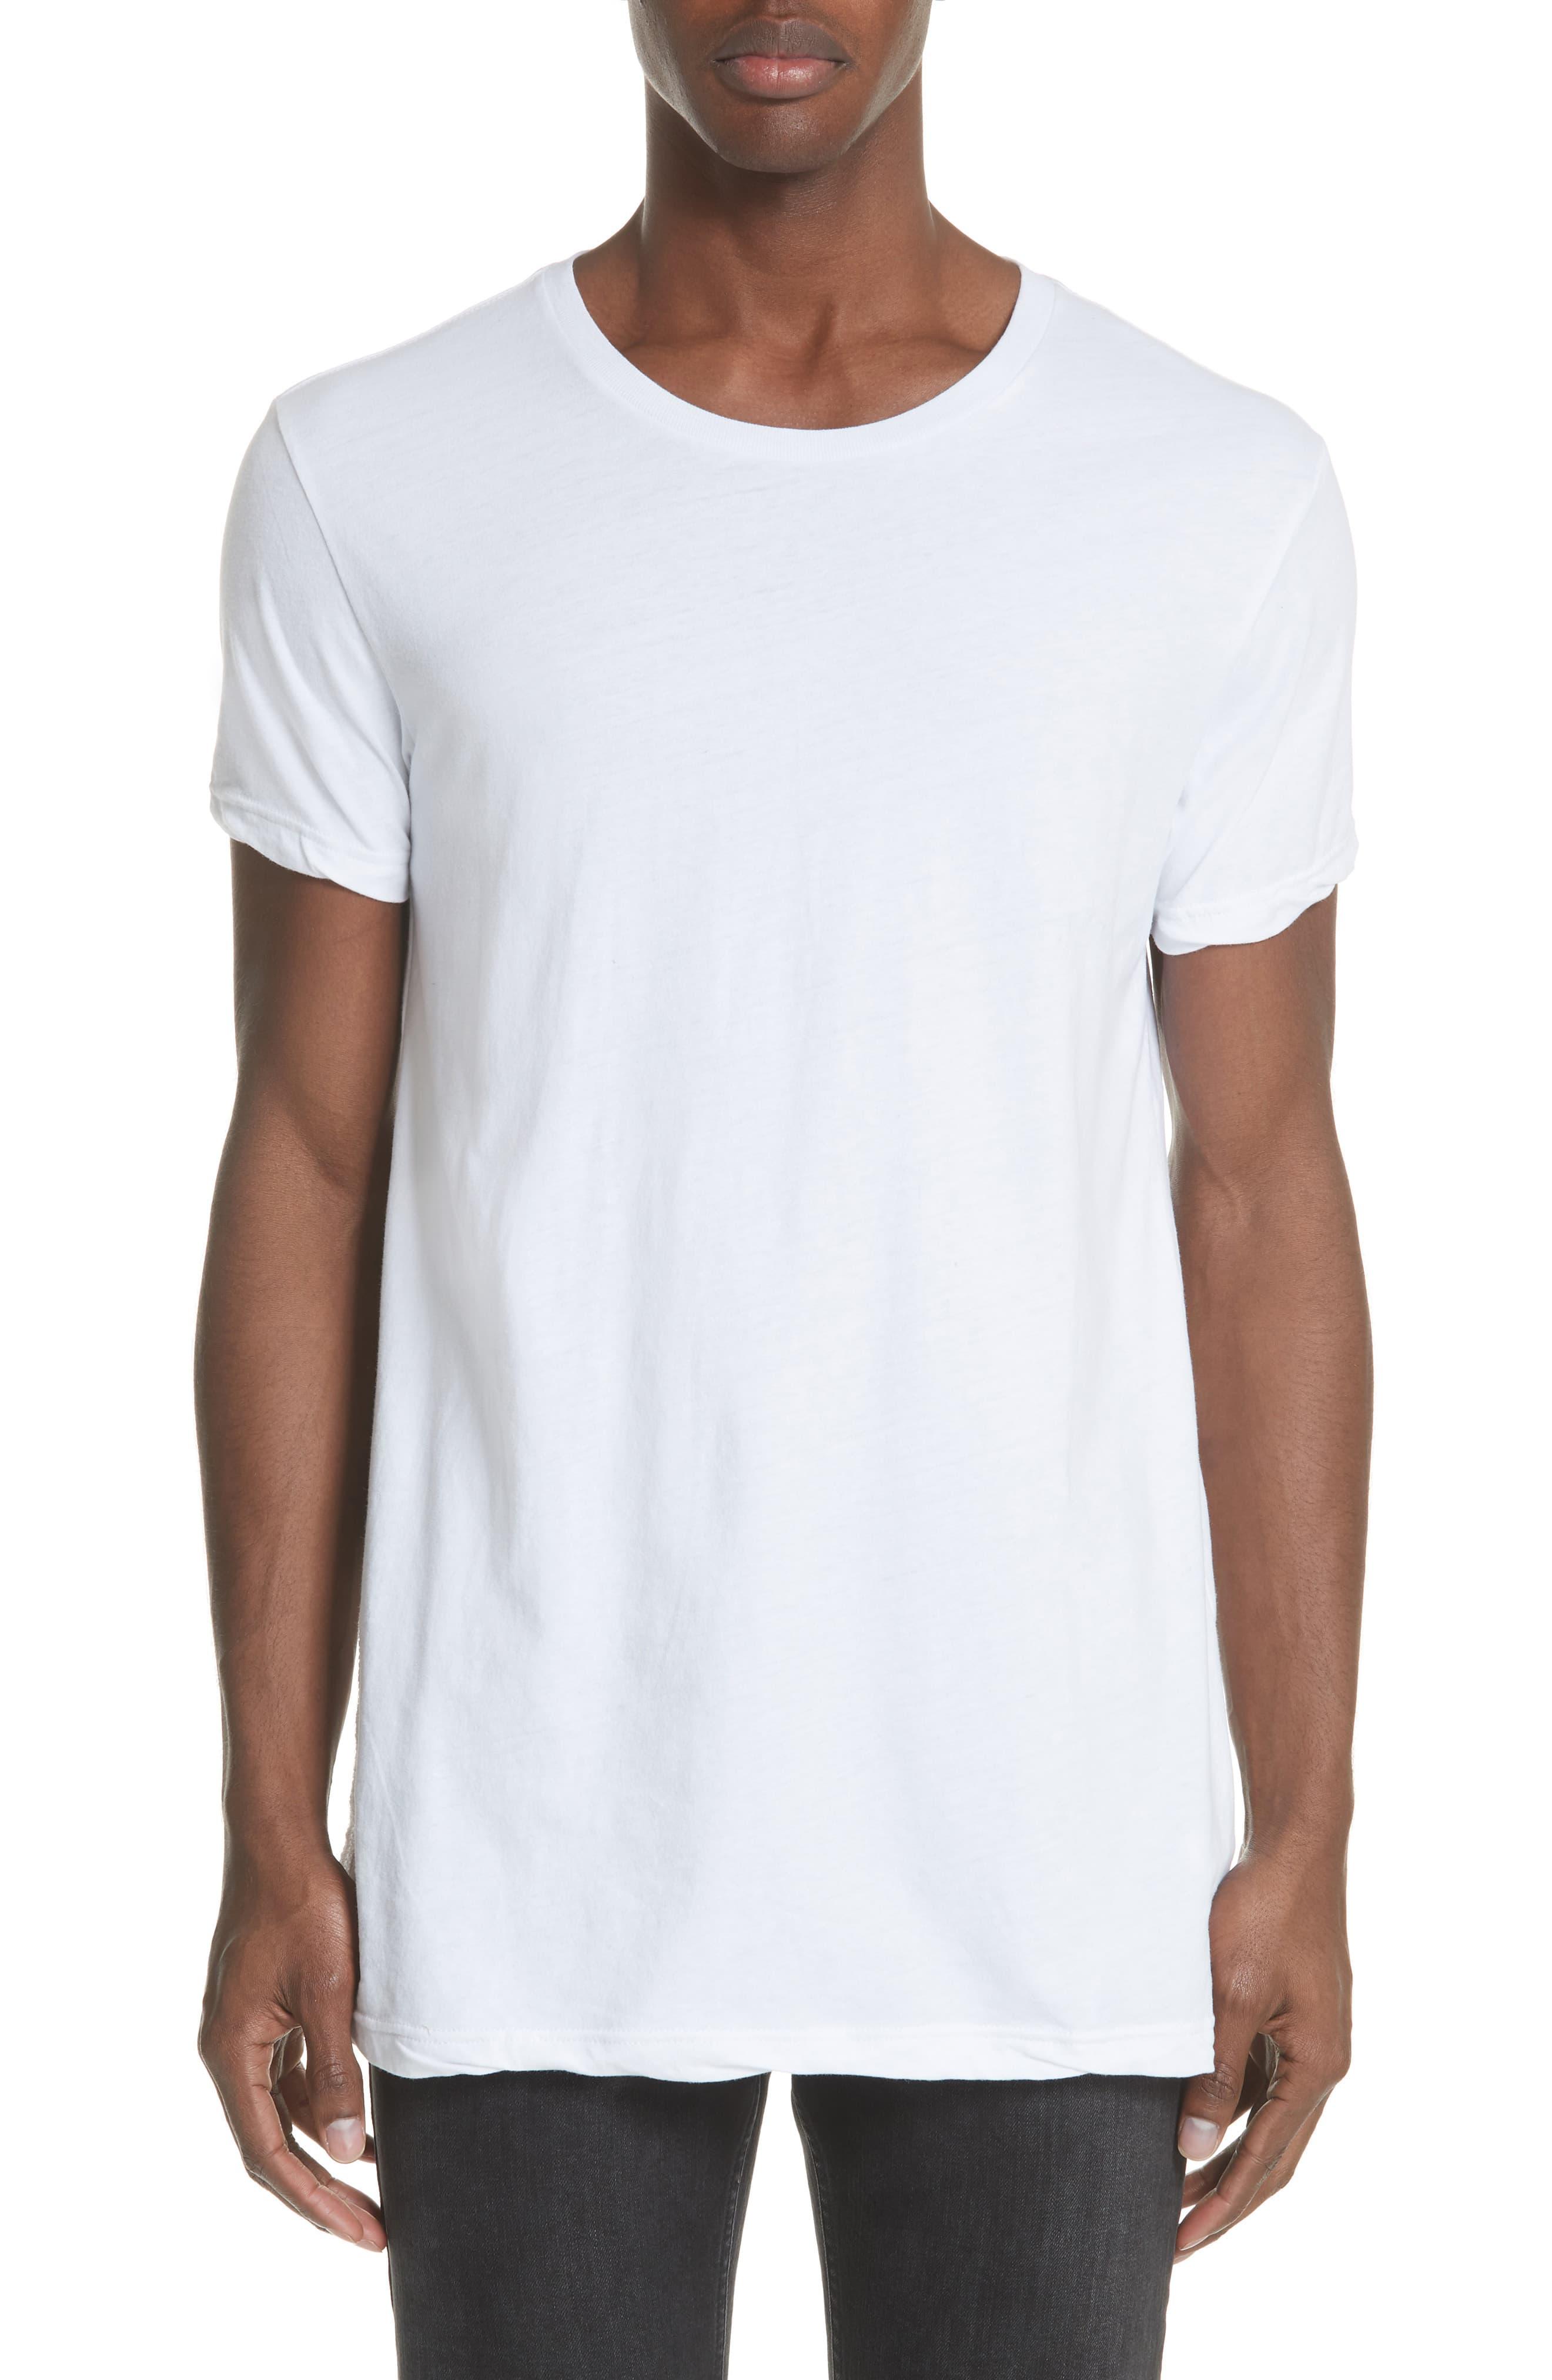 Ksubi Cotton Seeing Lines T-shirt in White for Men - Lyst